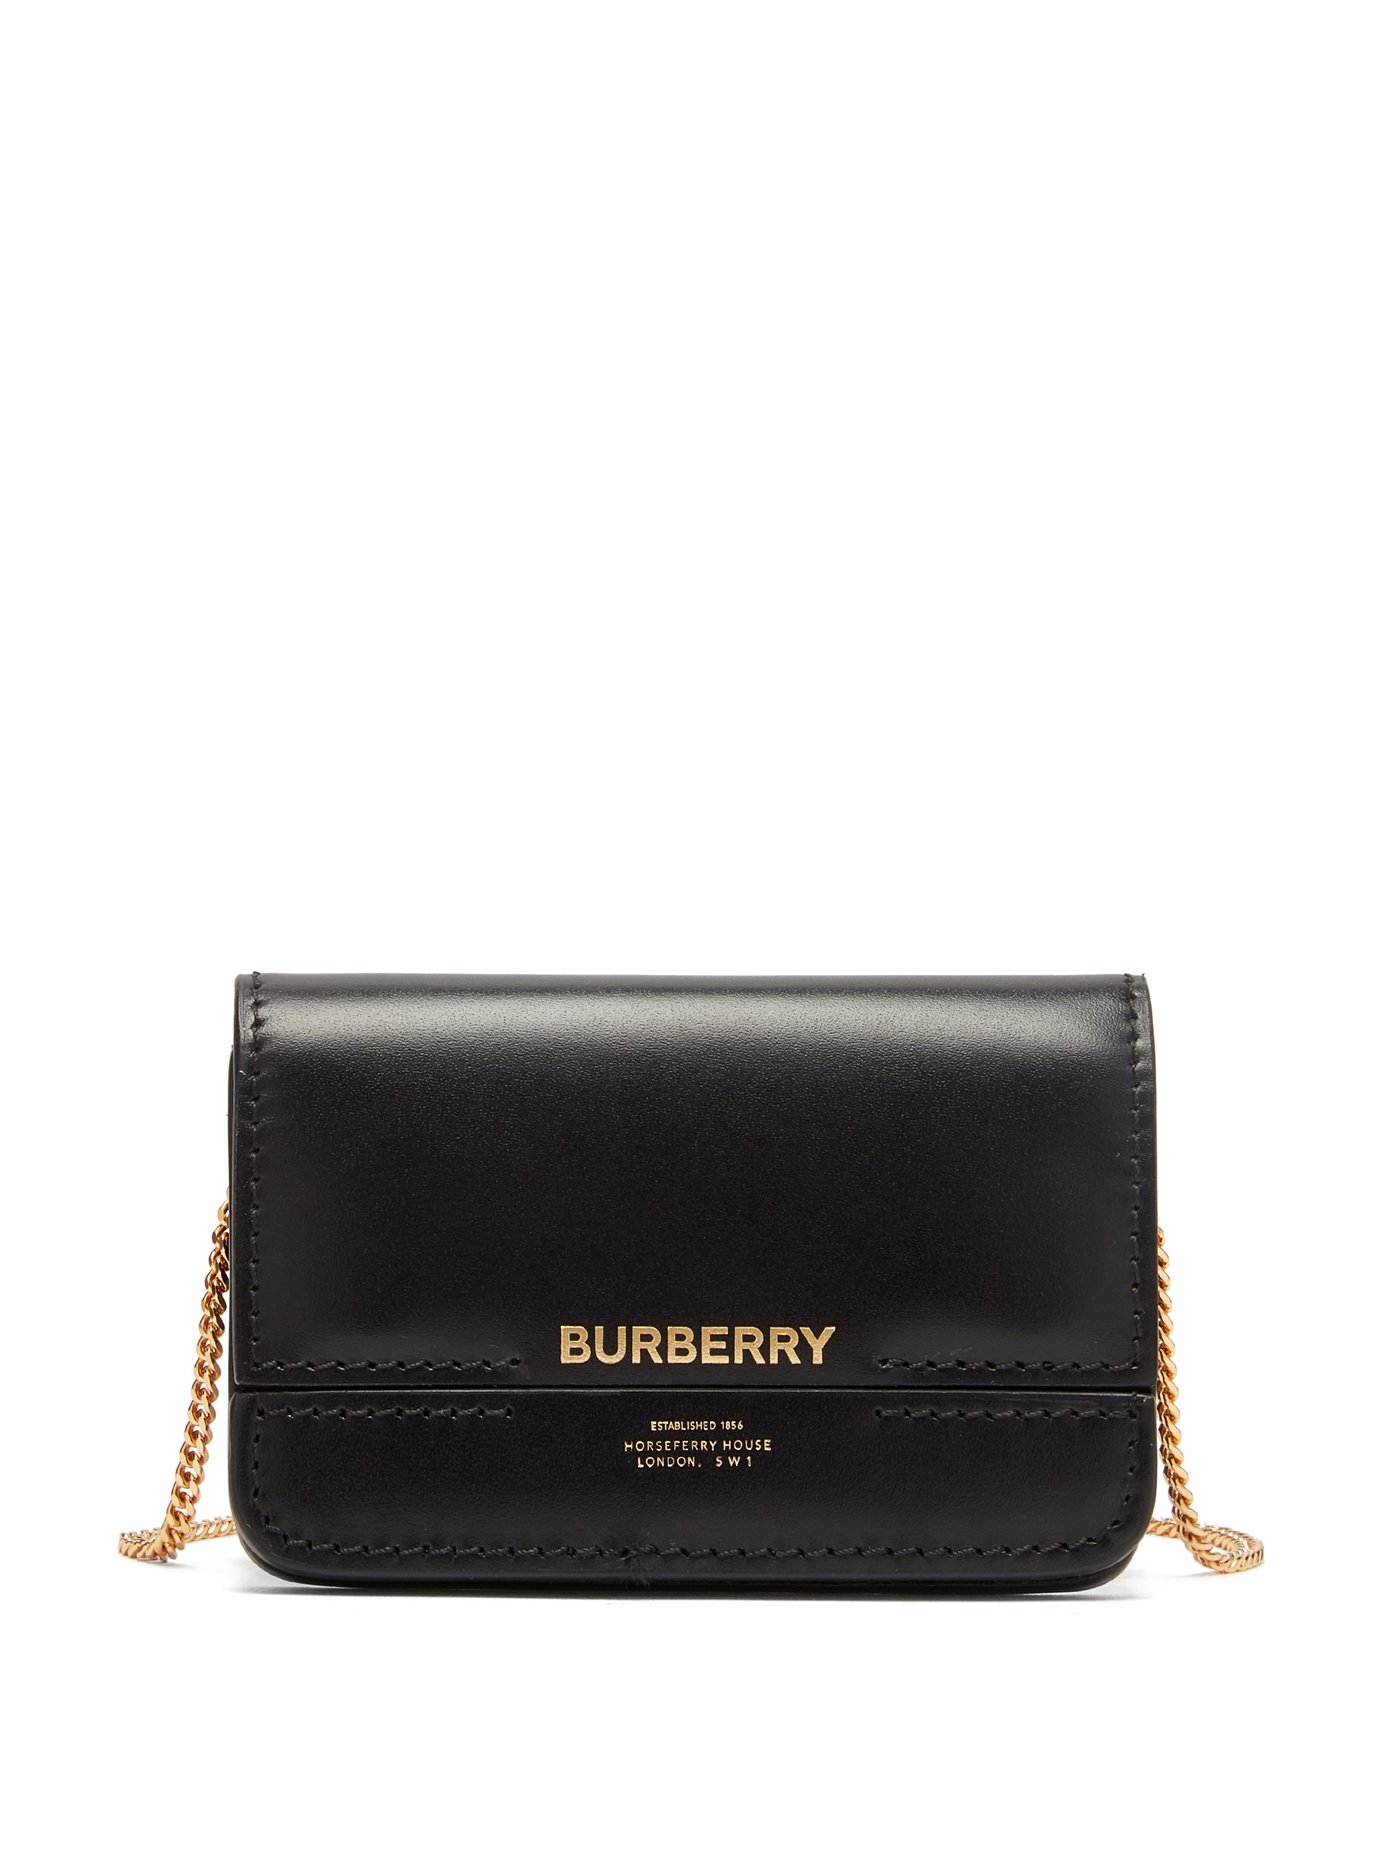 burberry chain bag